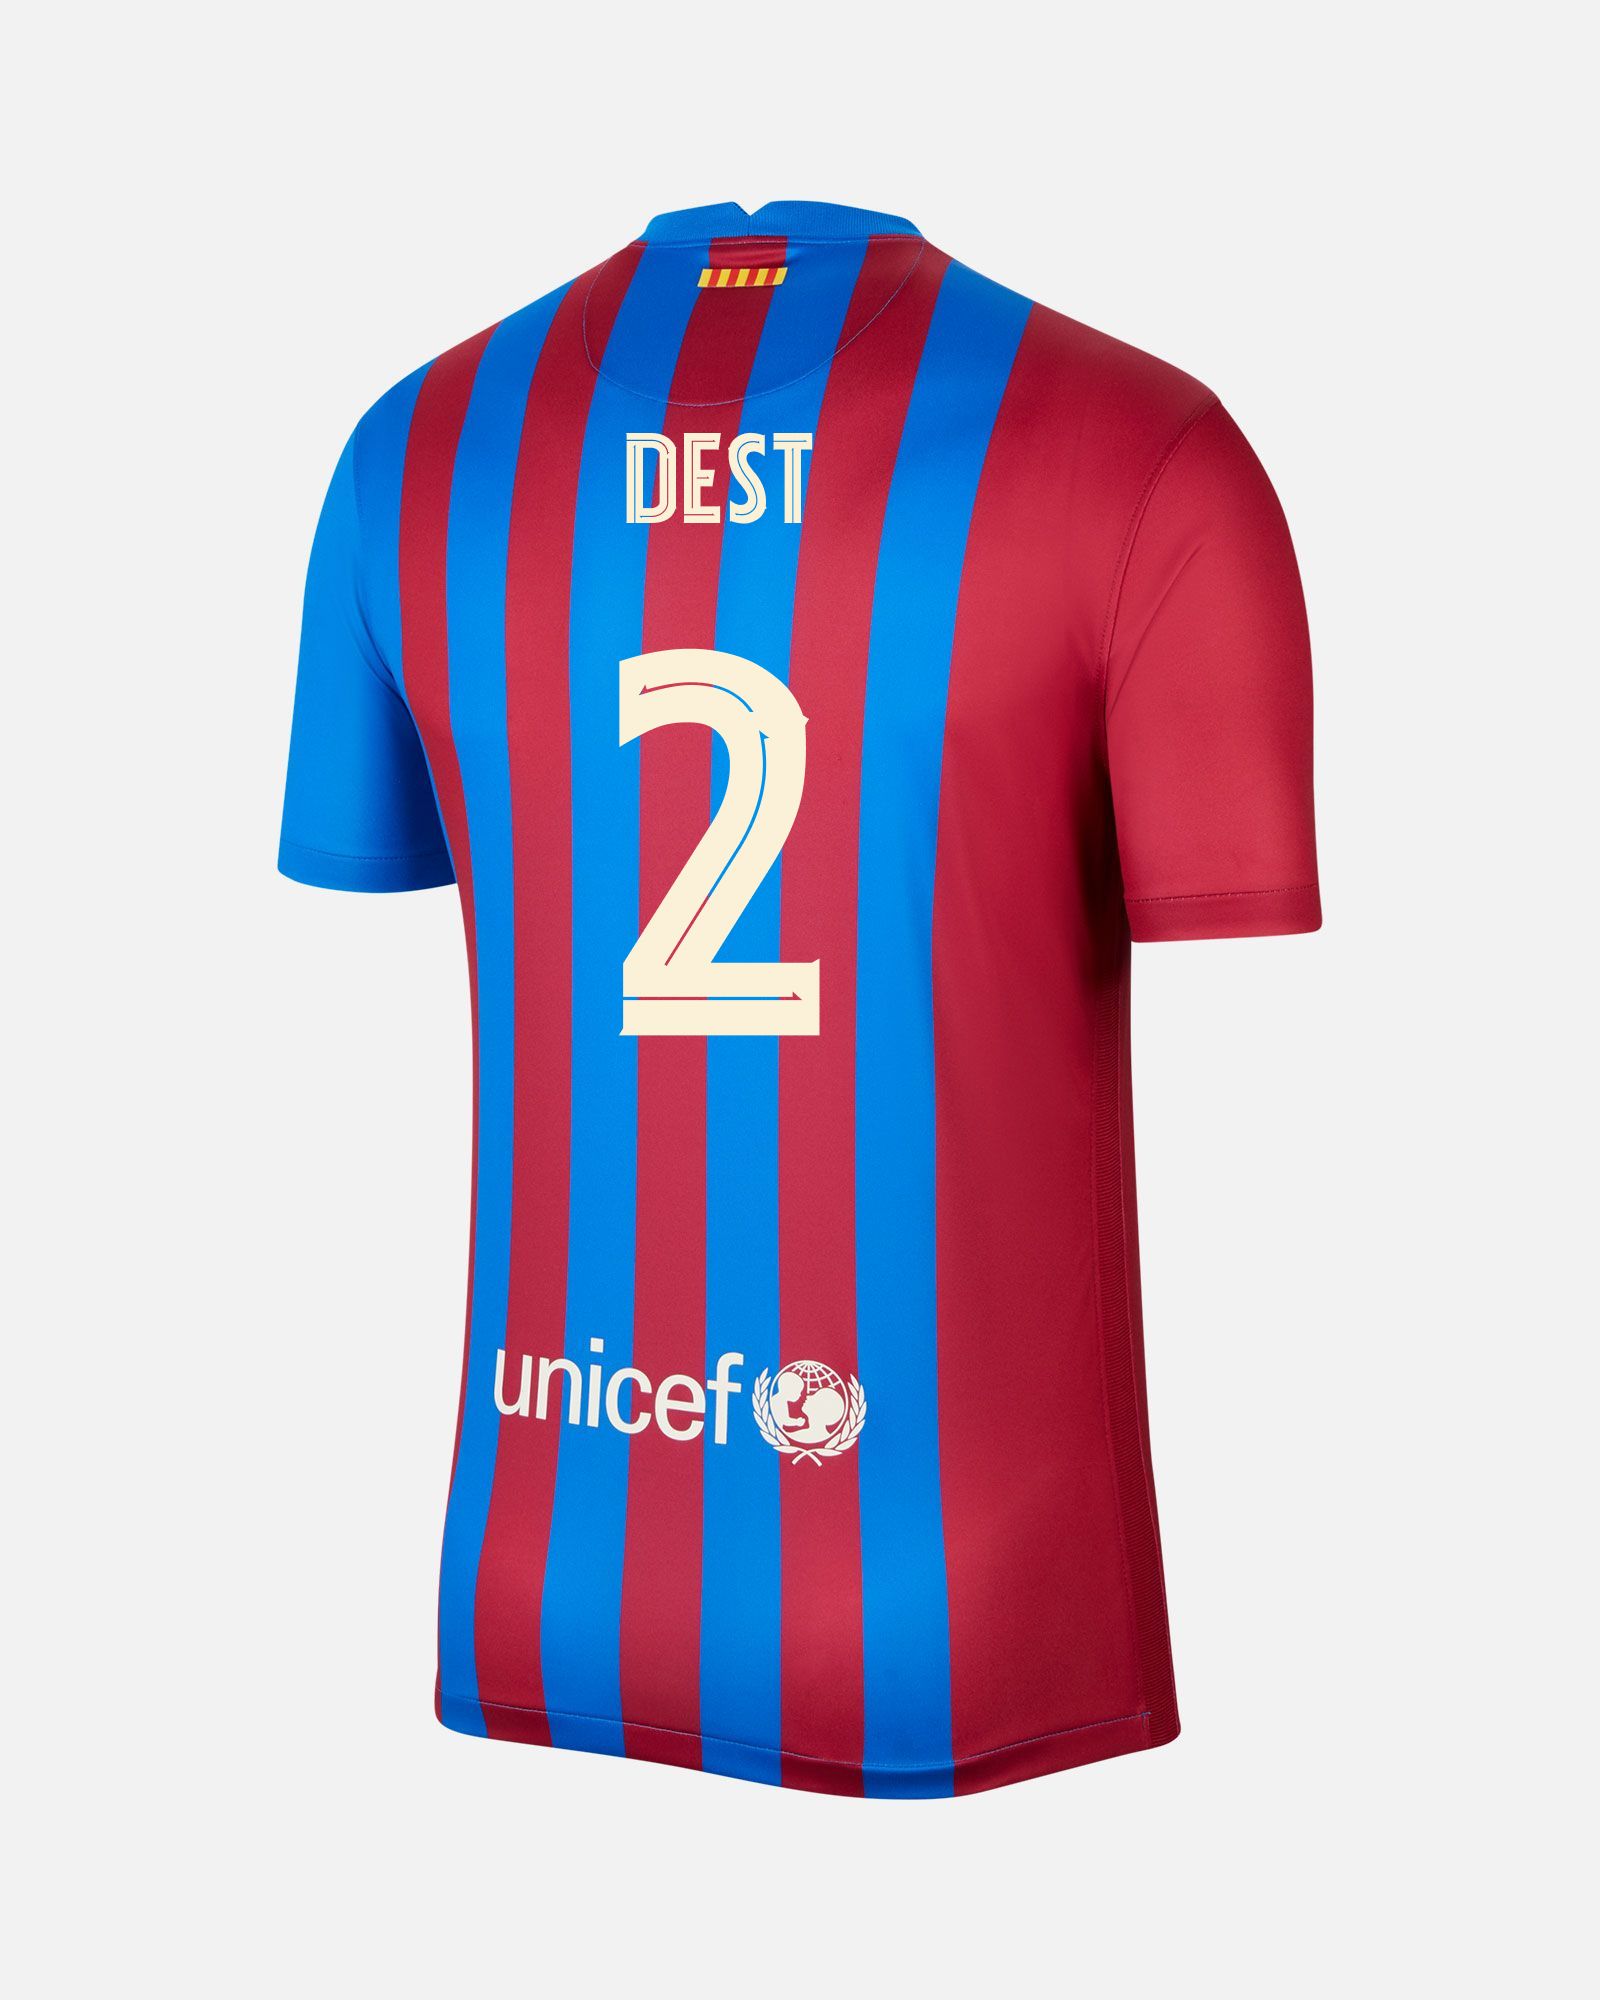 Camiseta 1ª FC Barcelona 2021/2022 Dest - Fútbol Factory